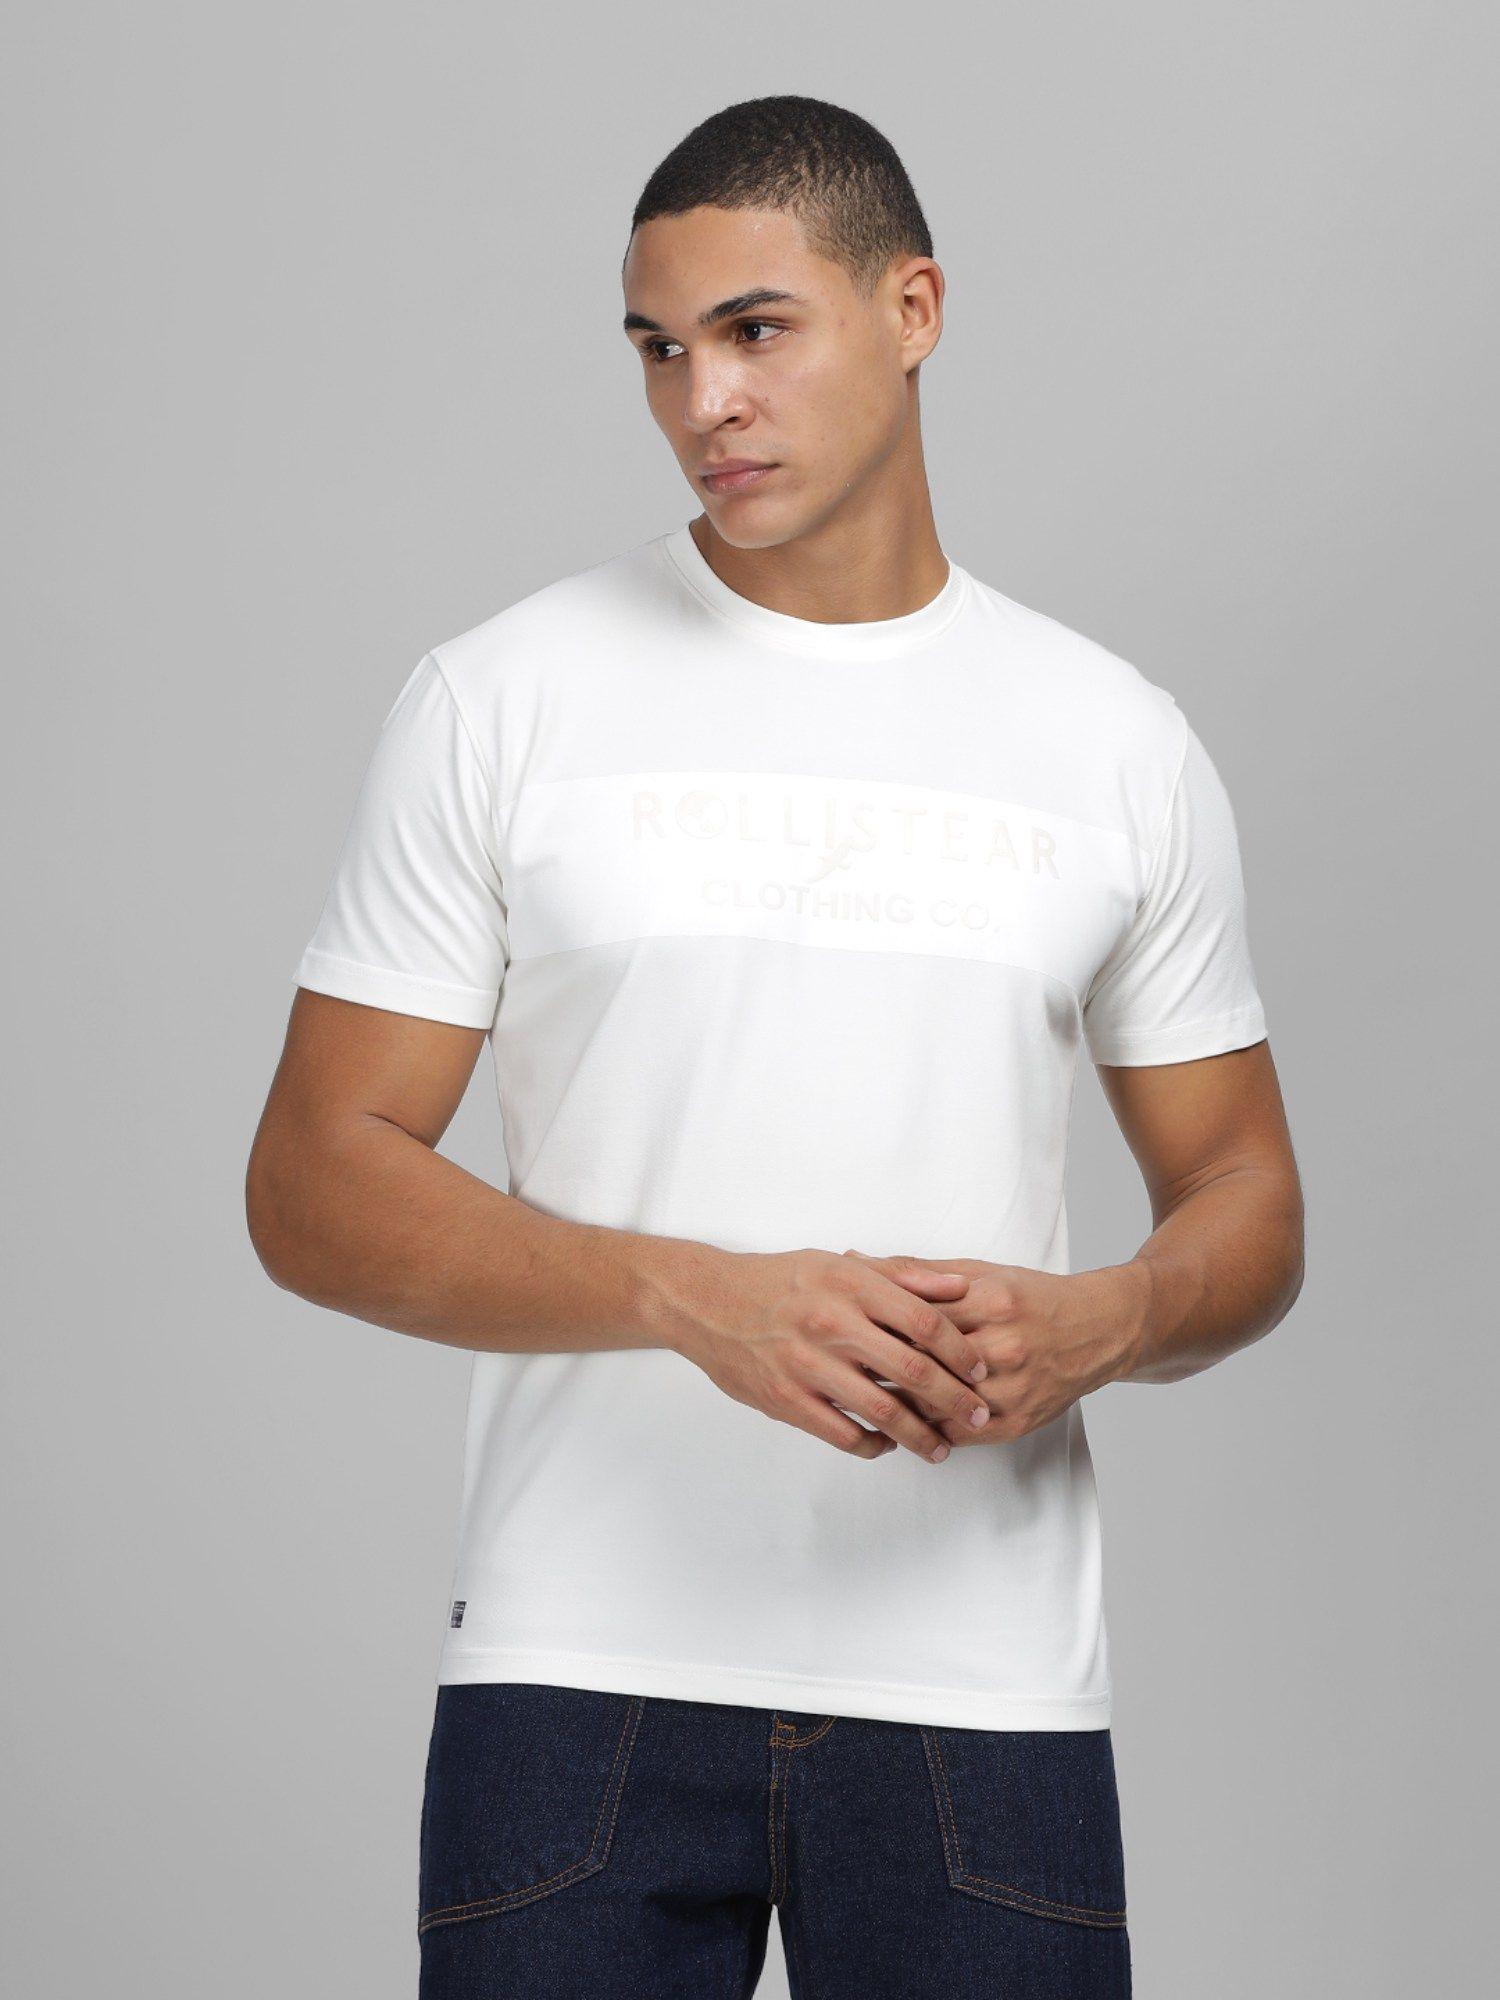 men's white printed round neck t-shirt